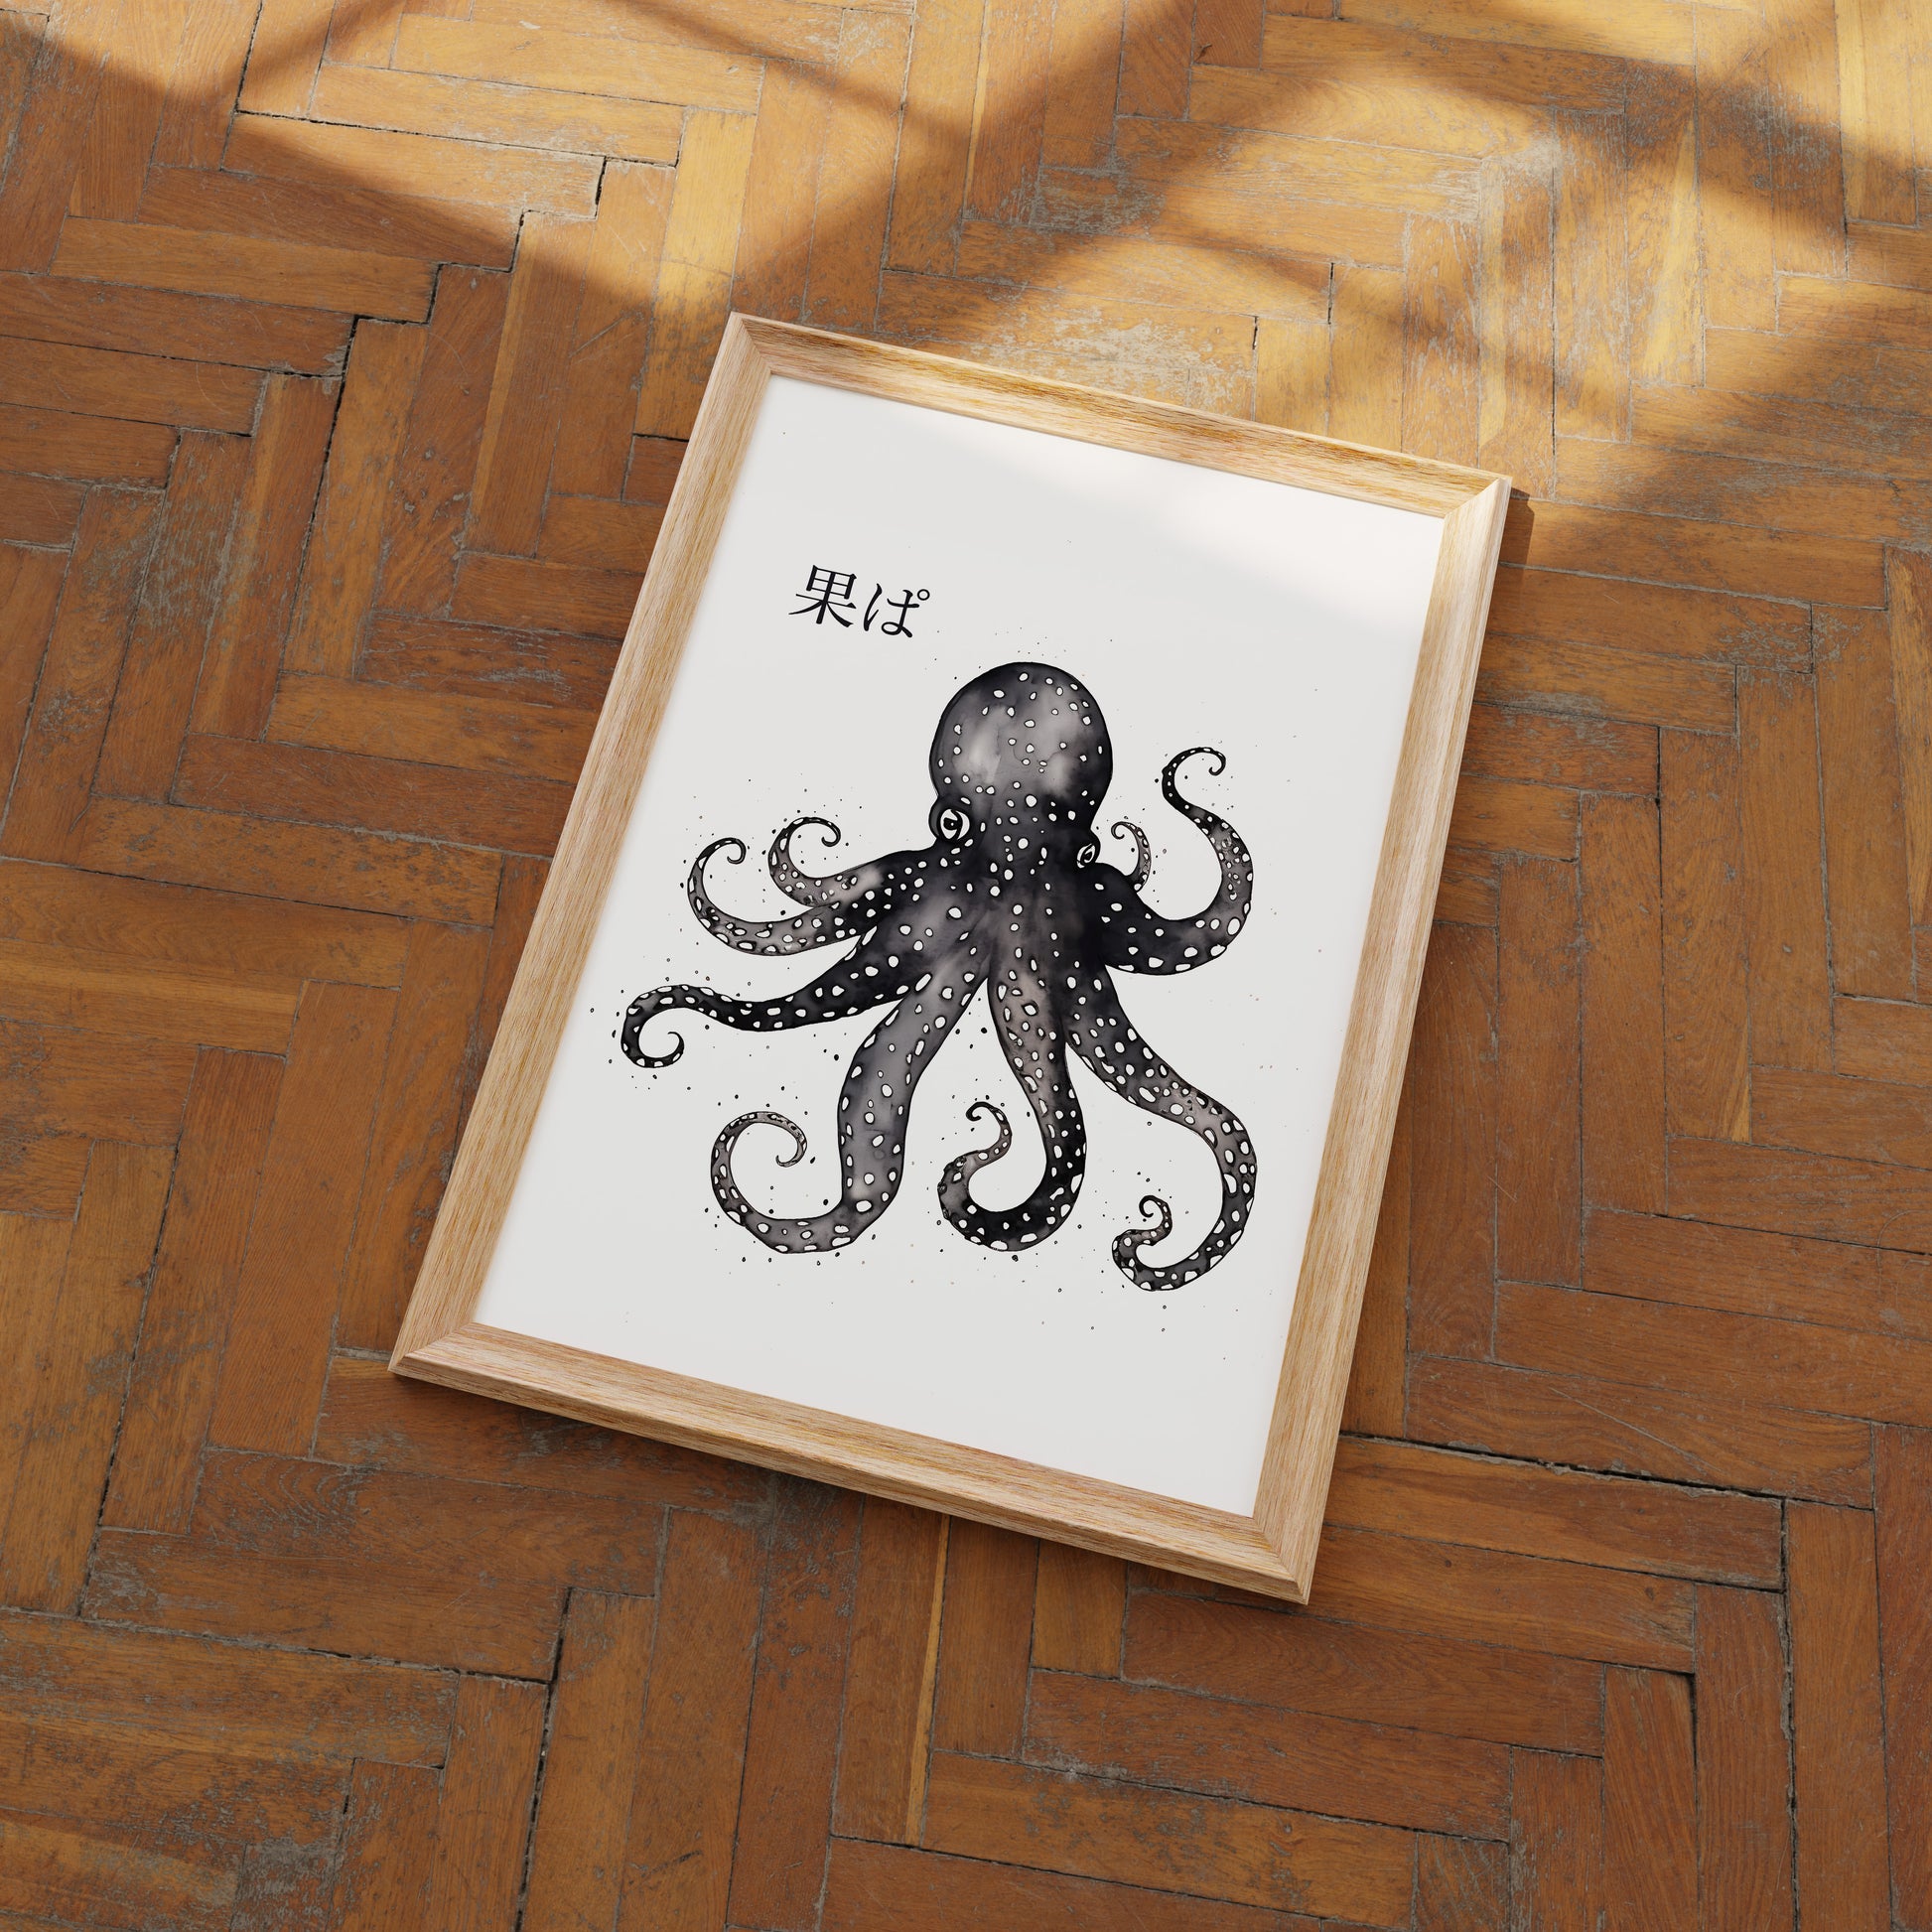 A framed illustration of an octopus on a wooden floor.